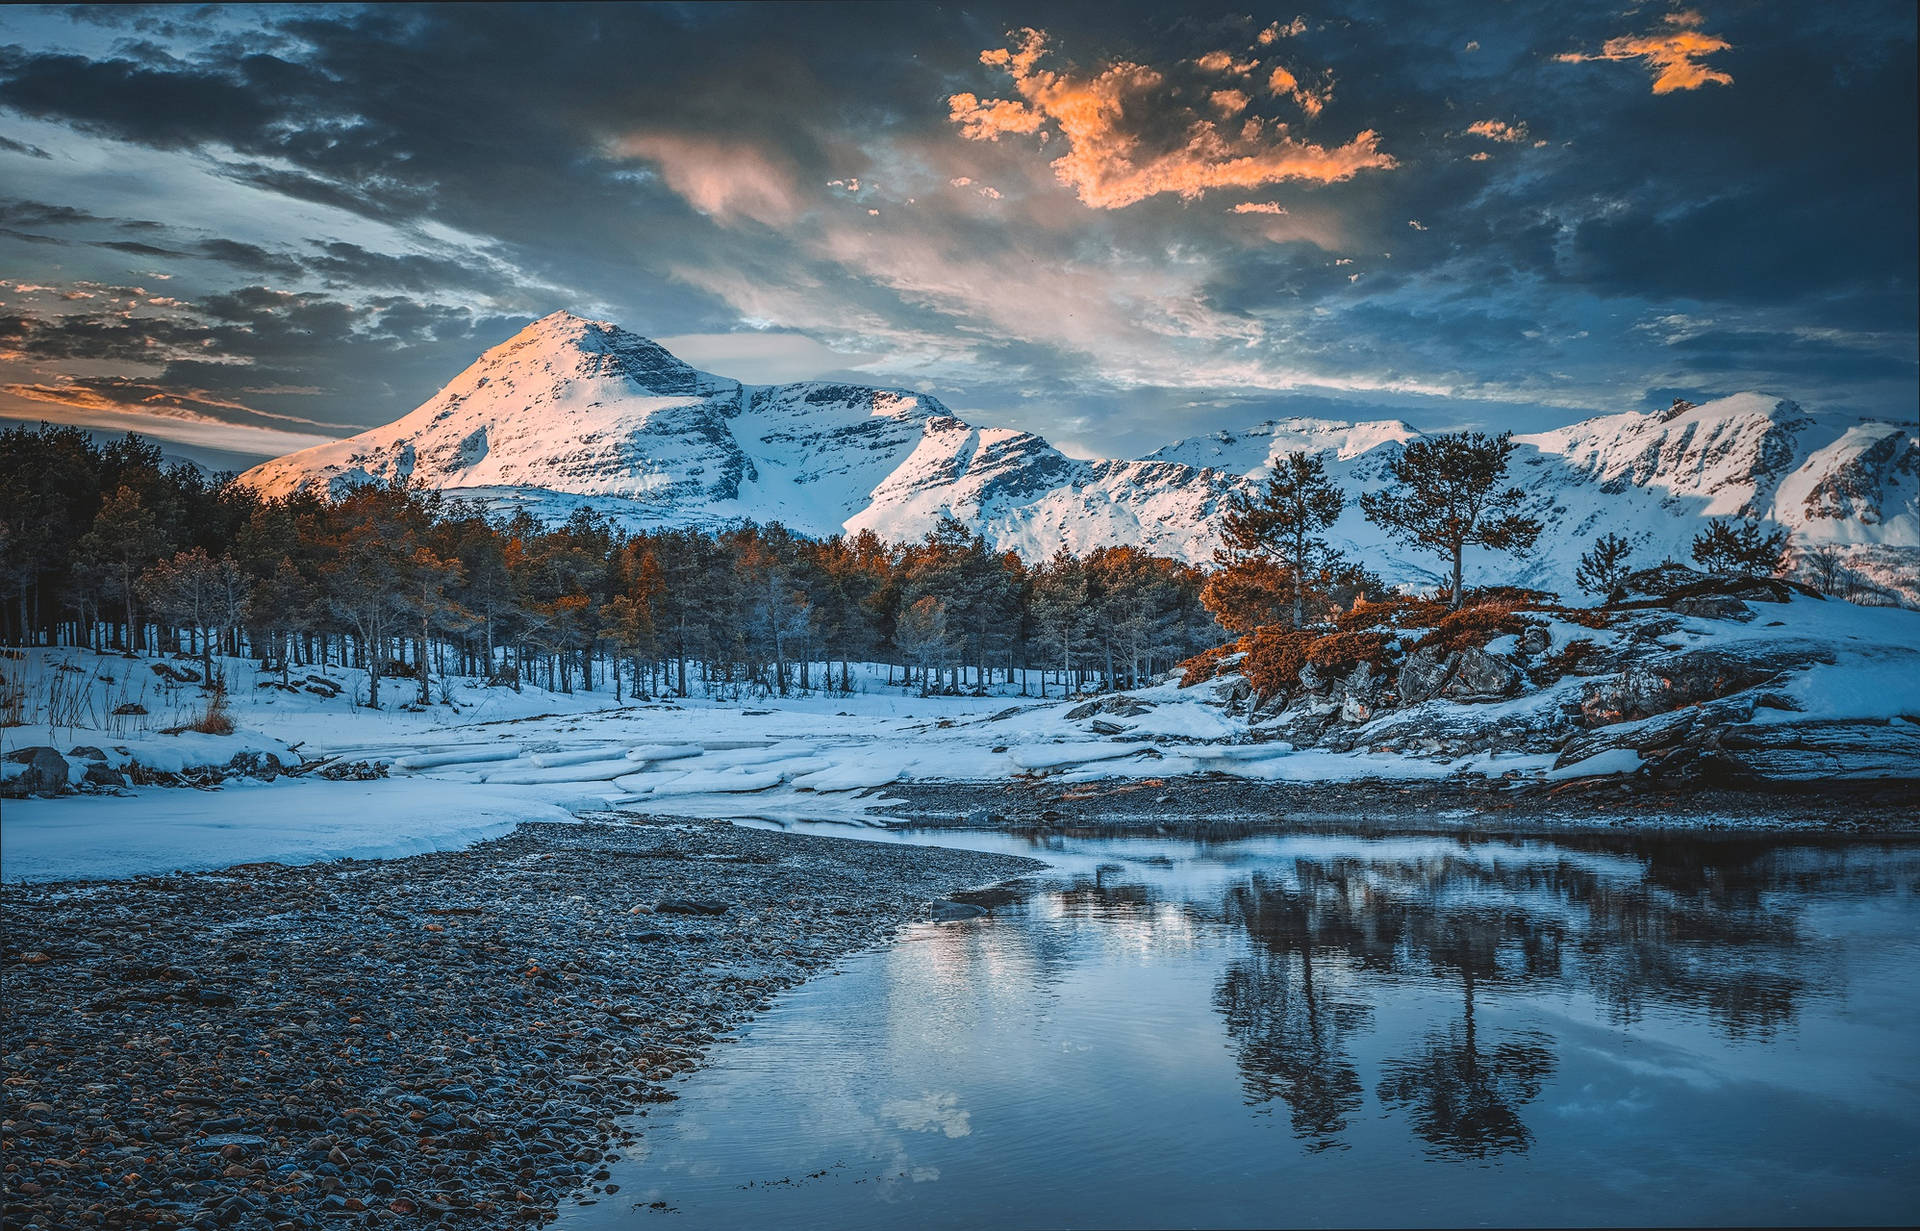 Snow Mountain Winter Scenery Background